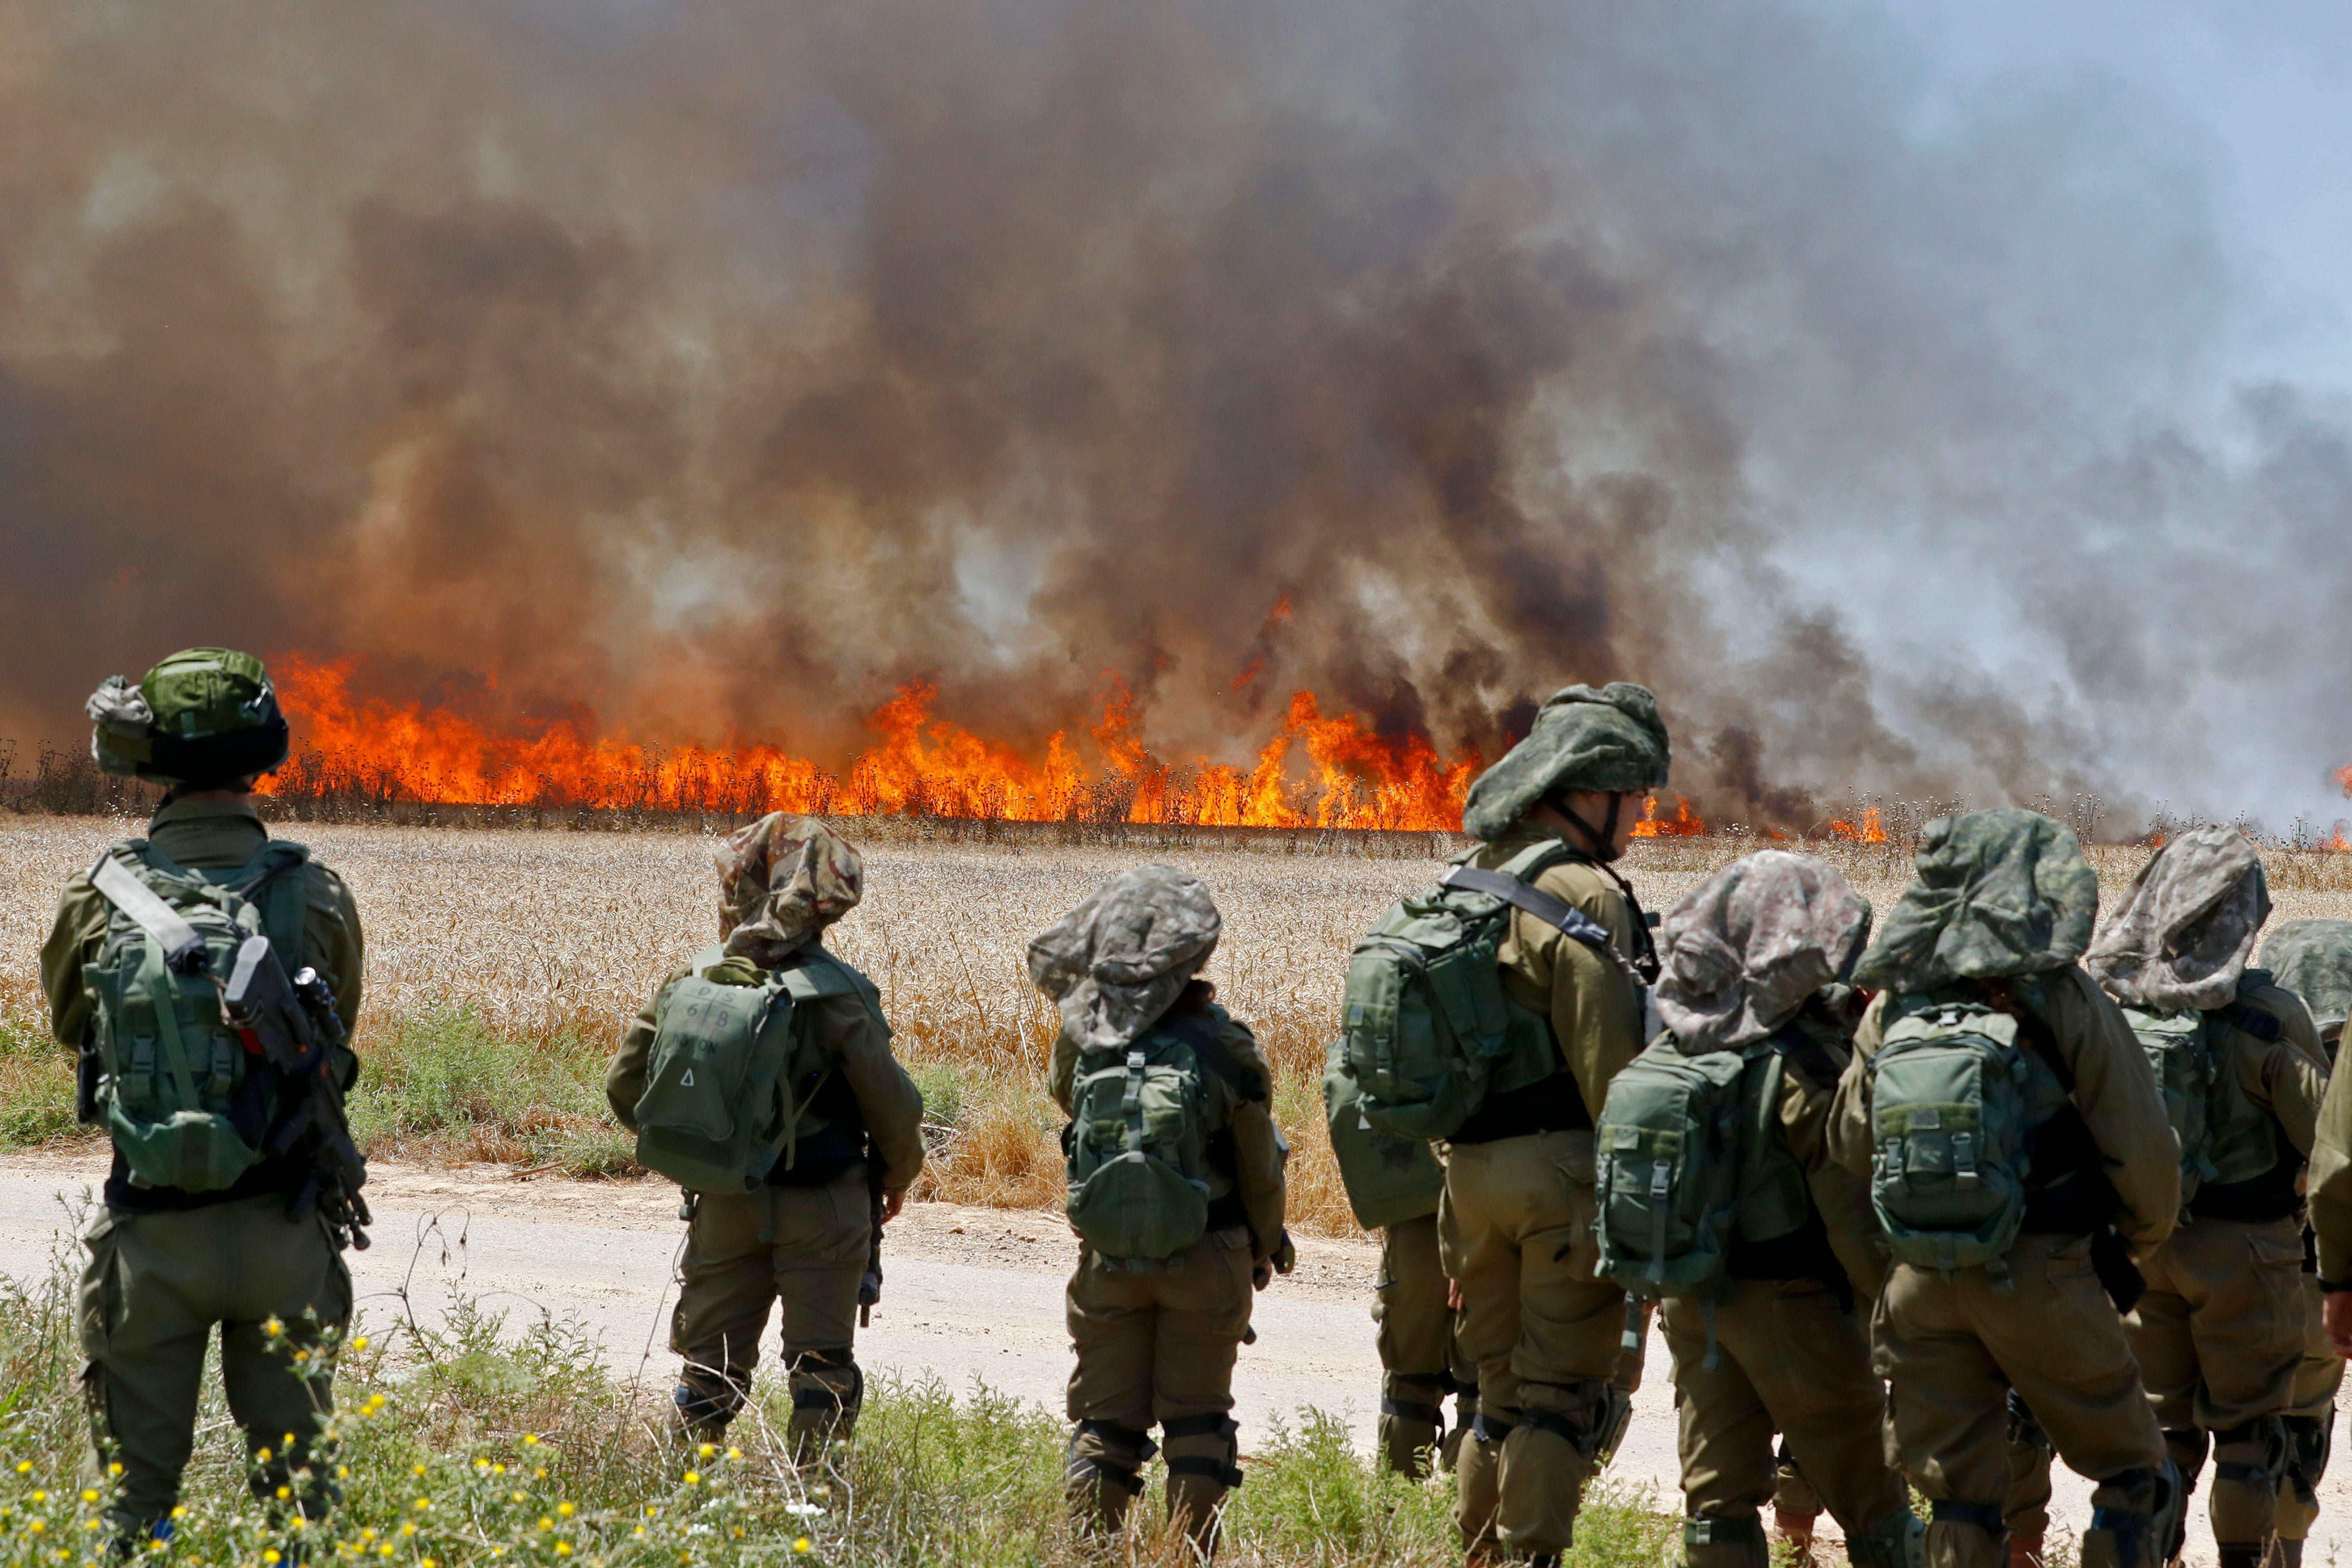 Israeli soldiers walk amid smoke from a fire in a wheat field.